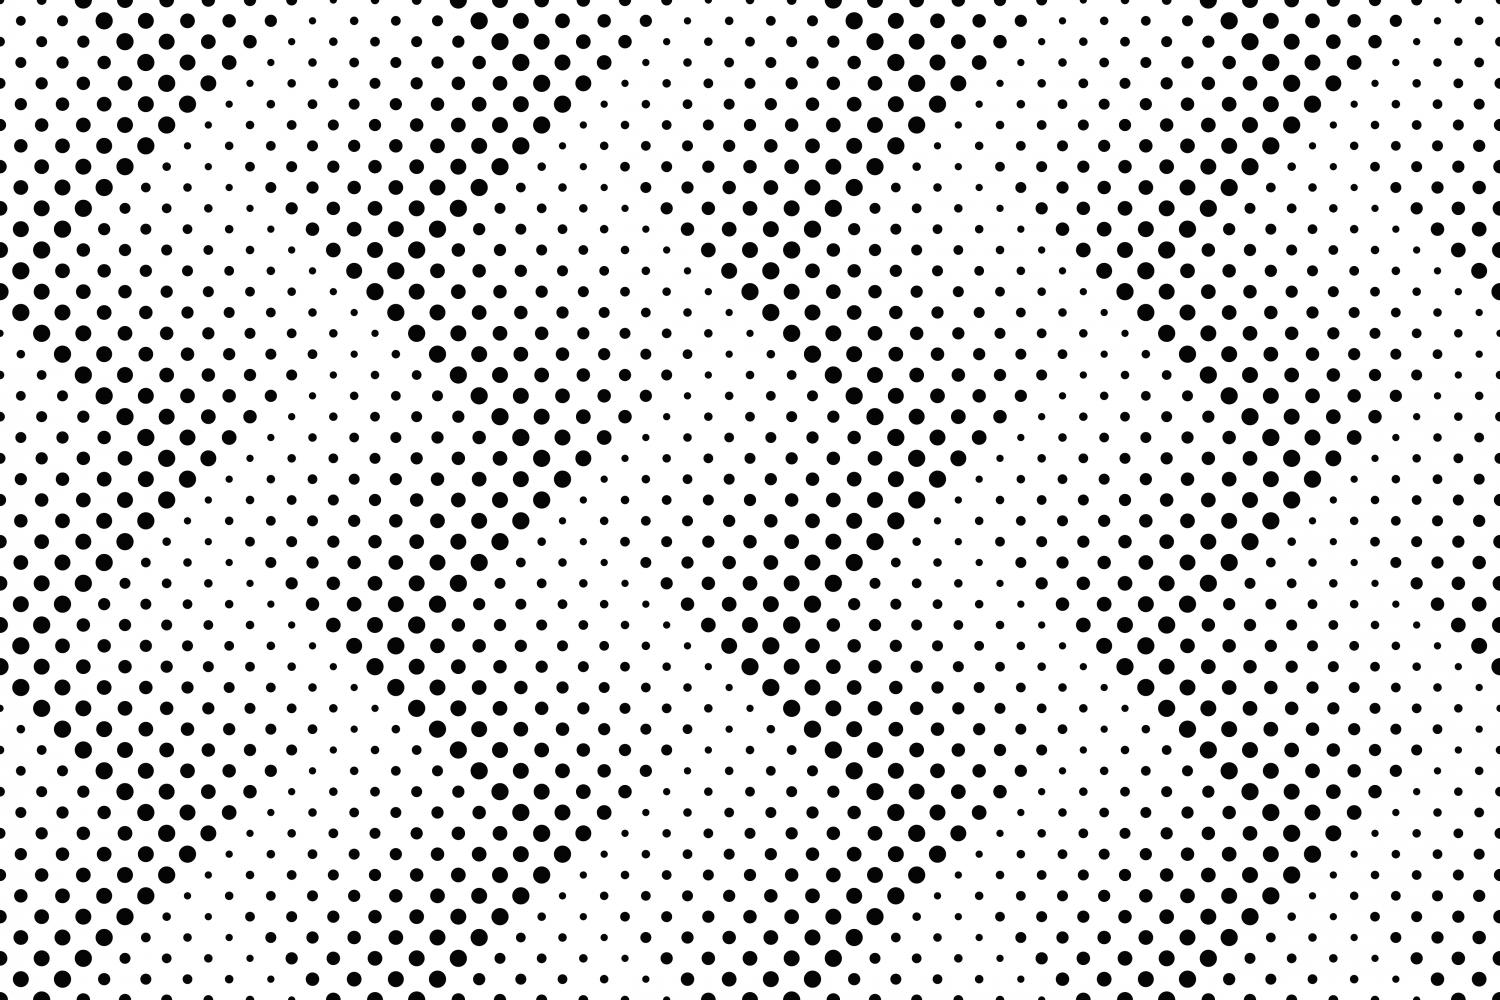 24 Seamless Dot Patterns (281129) | Patterns | Design Bundles